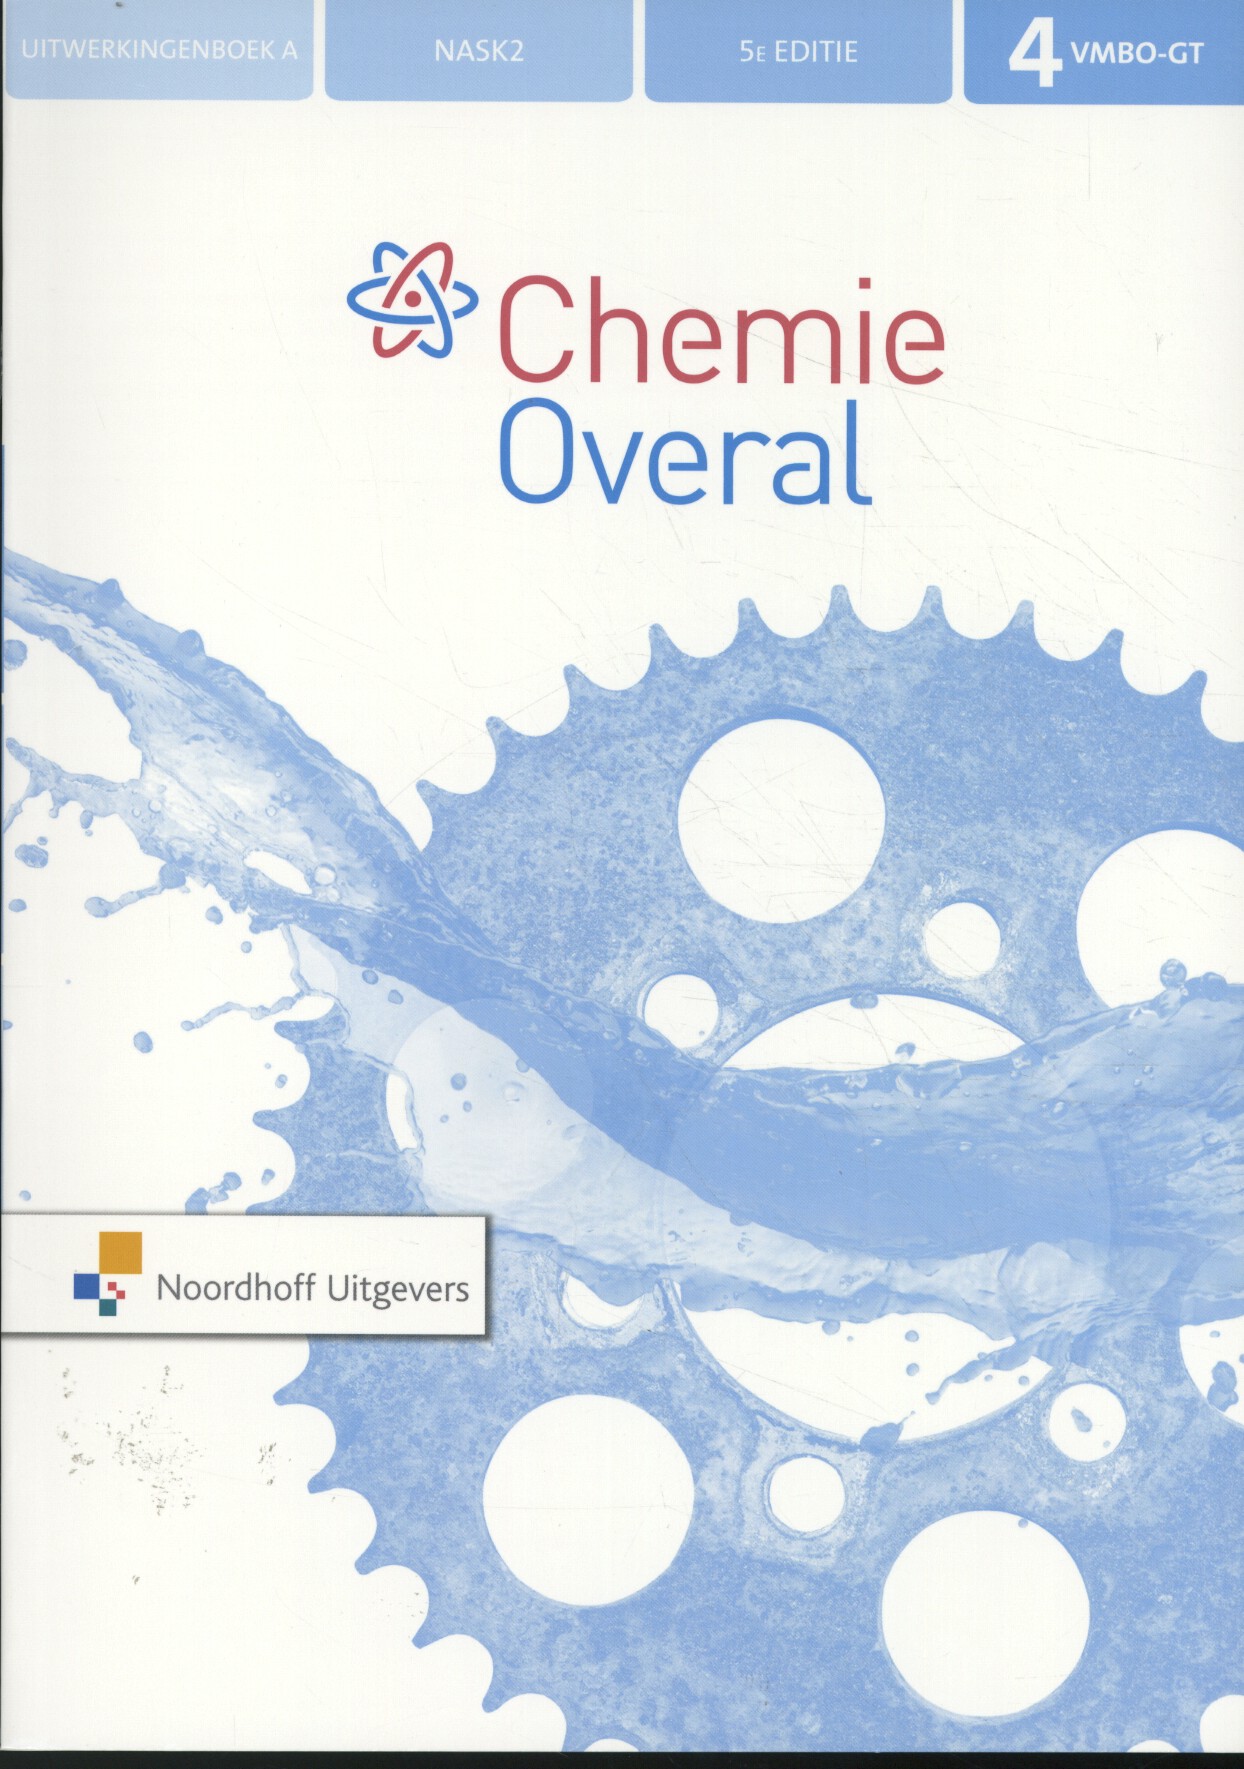 Chemie Overal NaSk2 vmbo-gt Uitwerkingenboek A